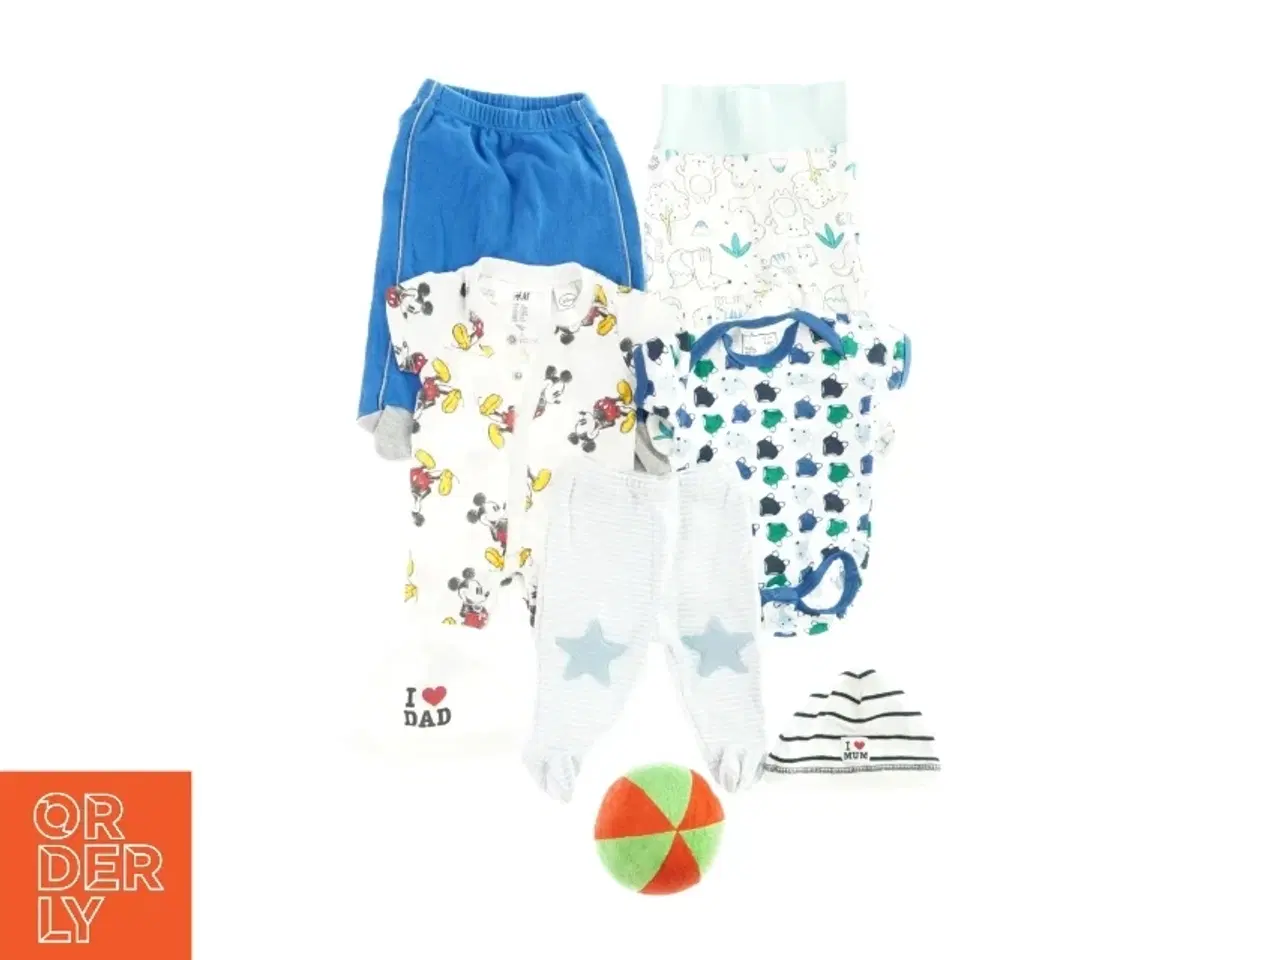 Billede 1 - Babytøj, 3 bukser, 2 bodystockings, 2 huer og en bold